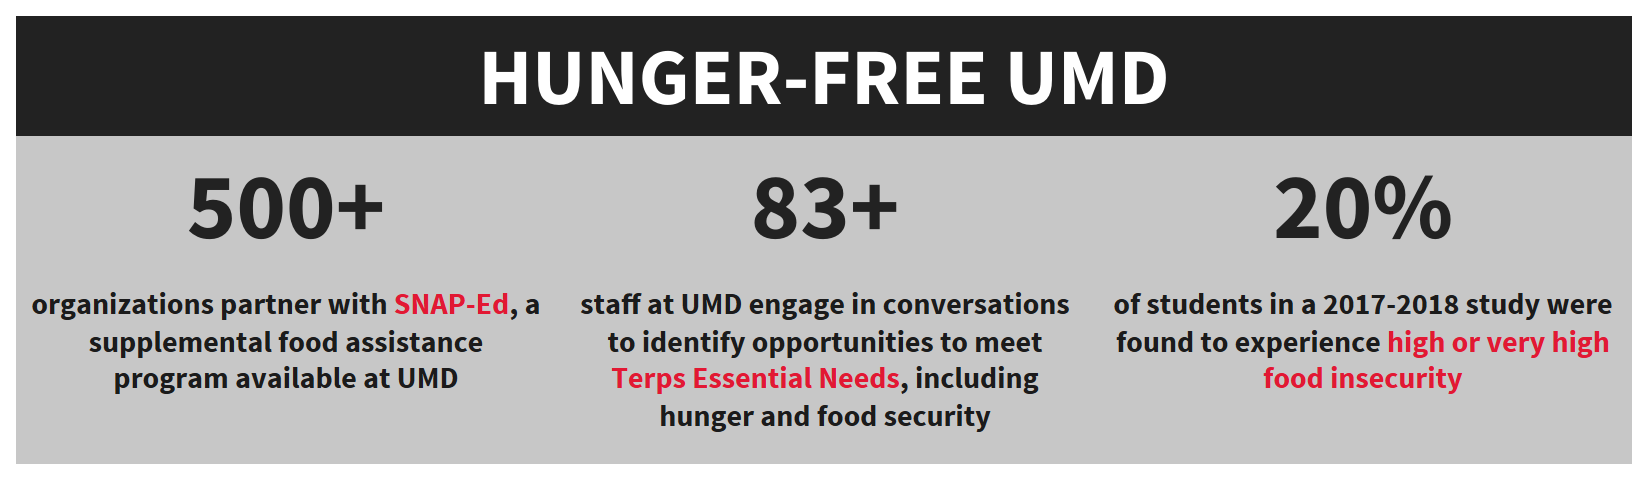 Hunger-Free UMD 10-Year Data Infographic